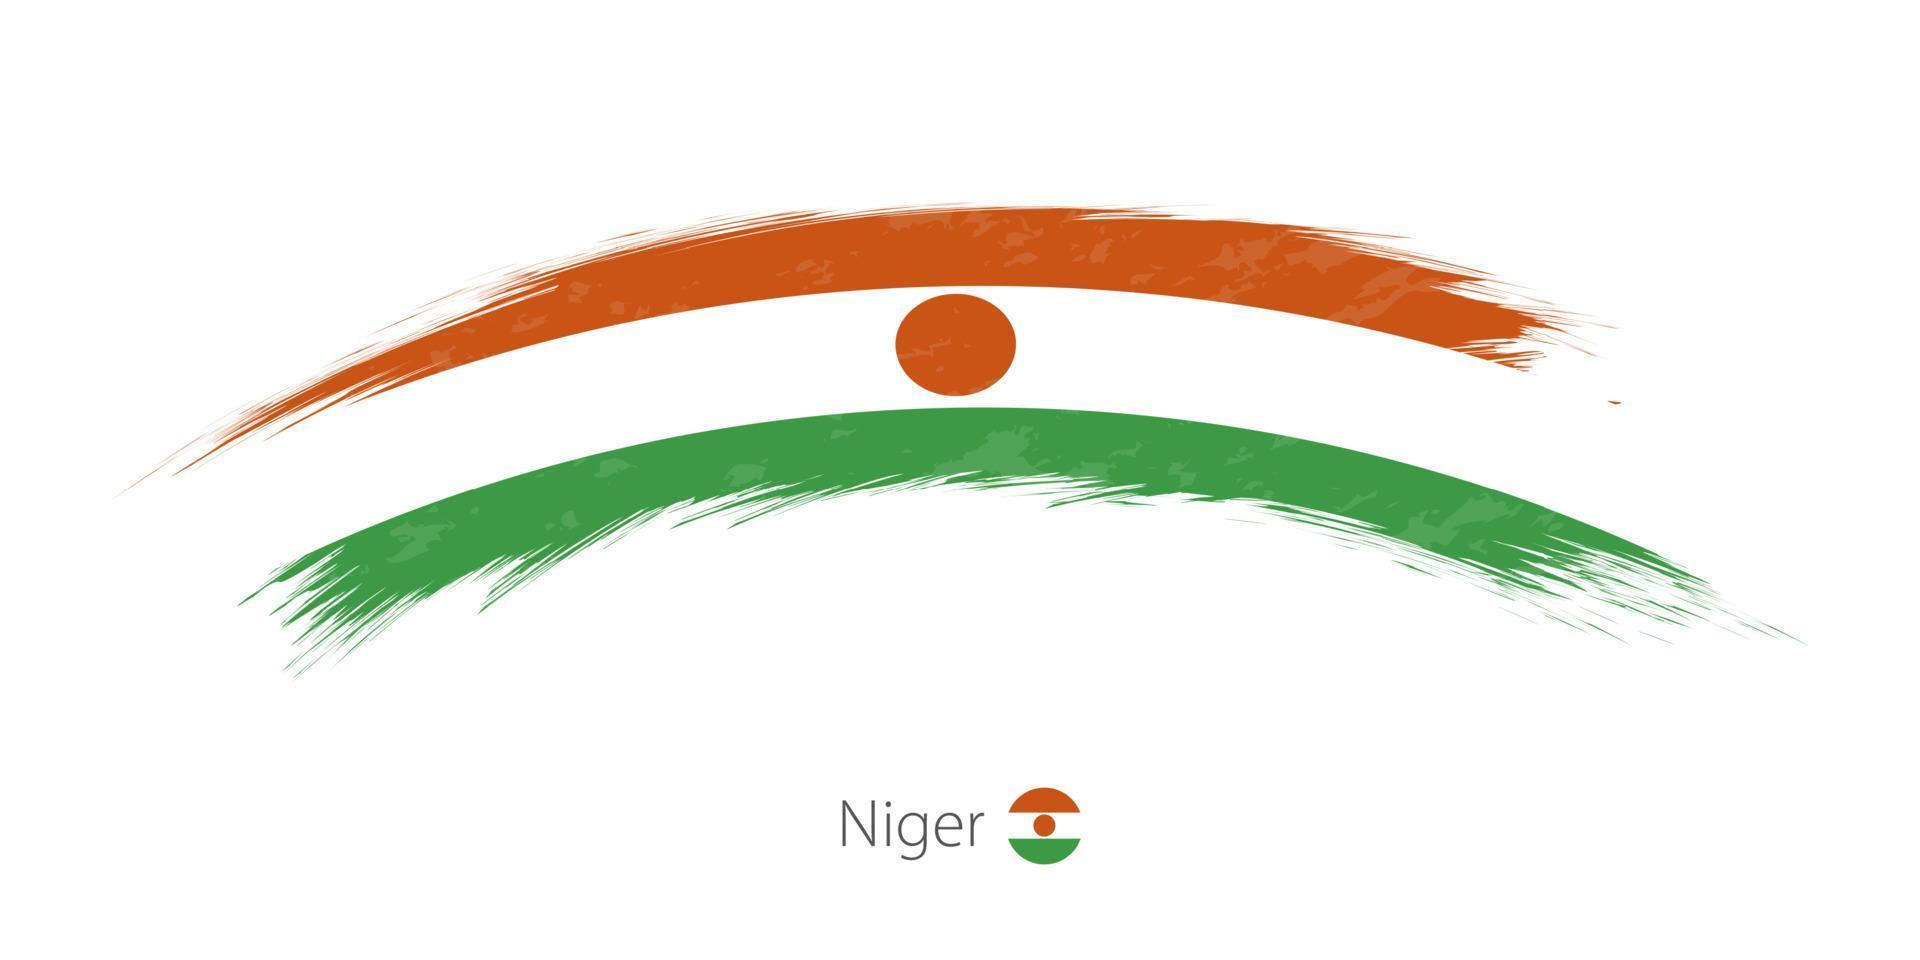 bandeira do niger na pincelada grunge arredondado. vetor